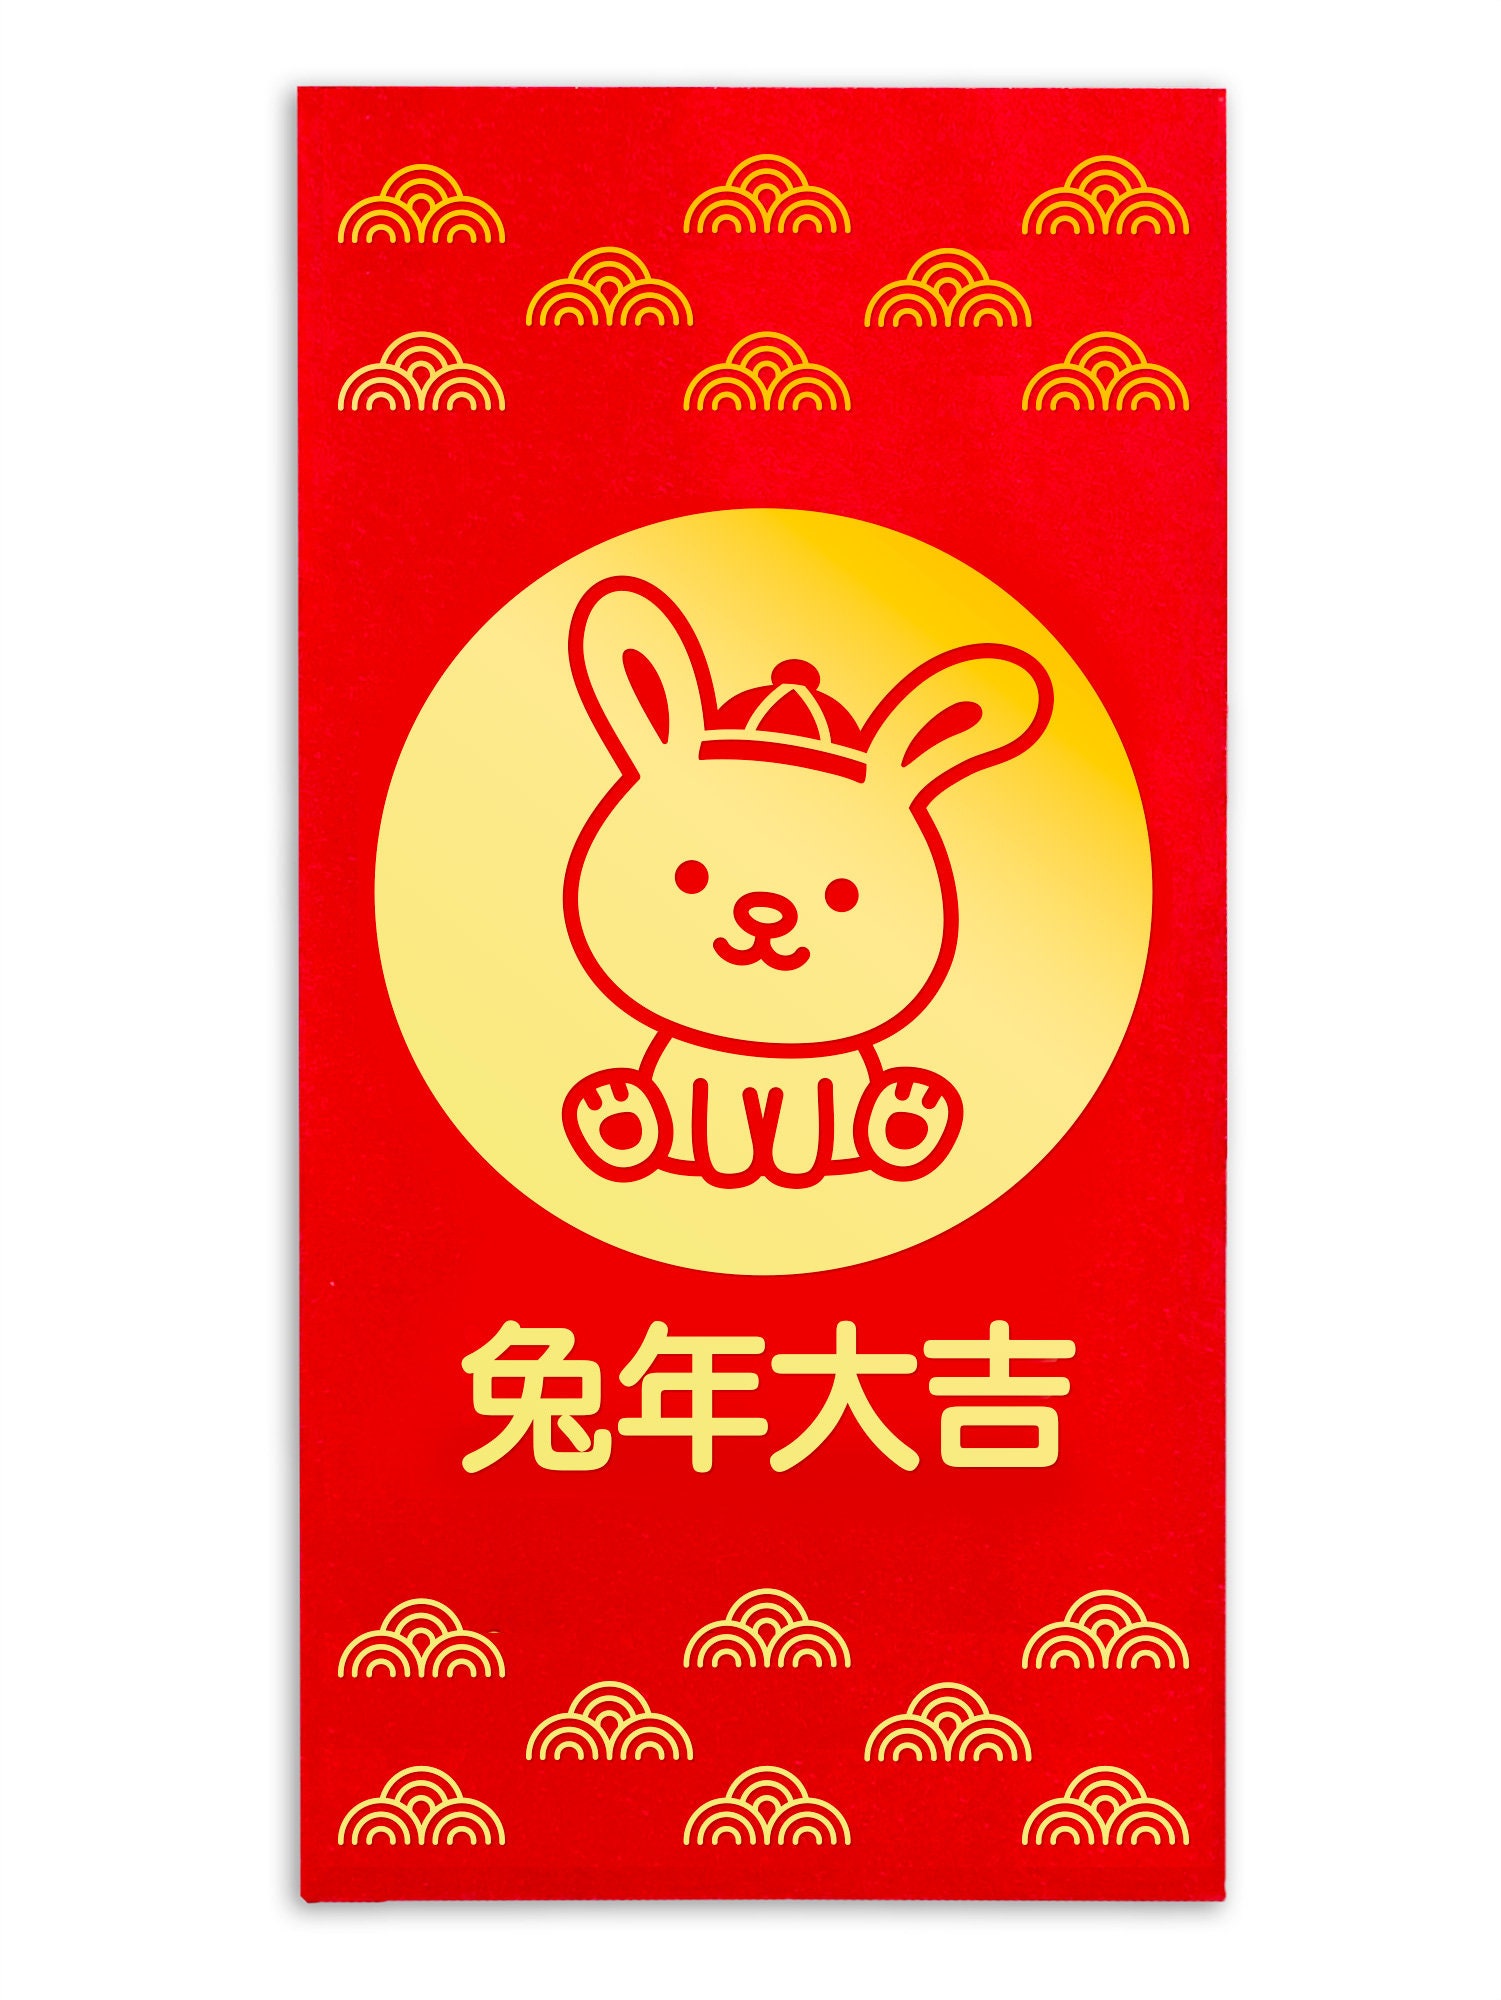 Red Envelope Rabbit Year Stock Photo 71240719